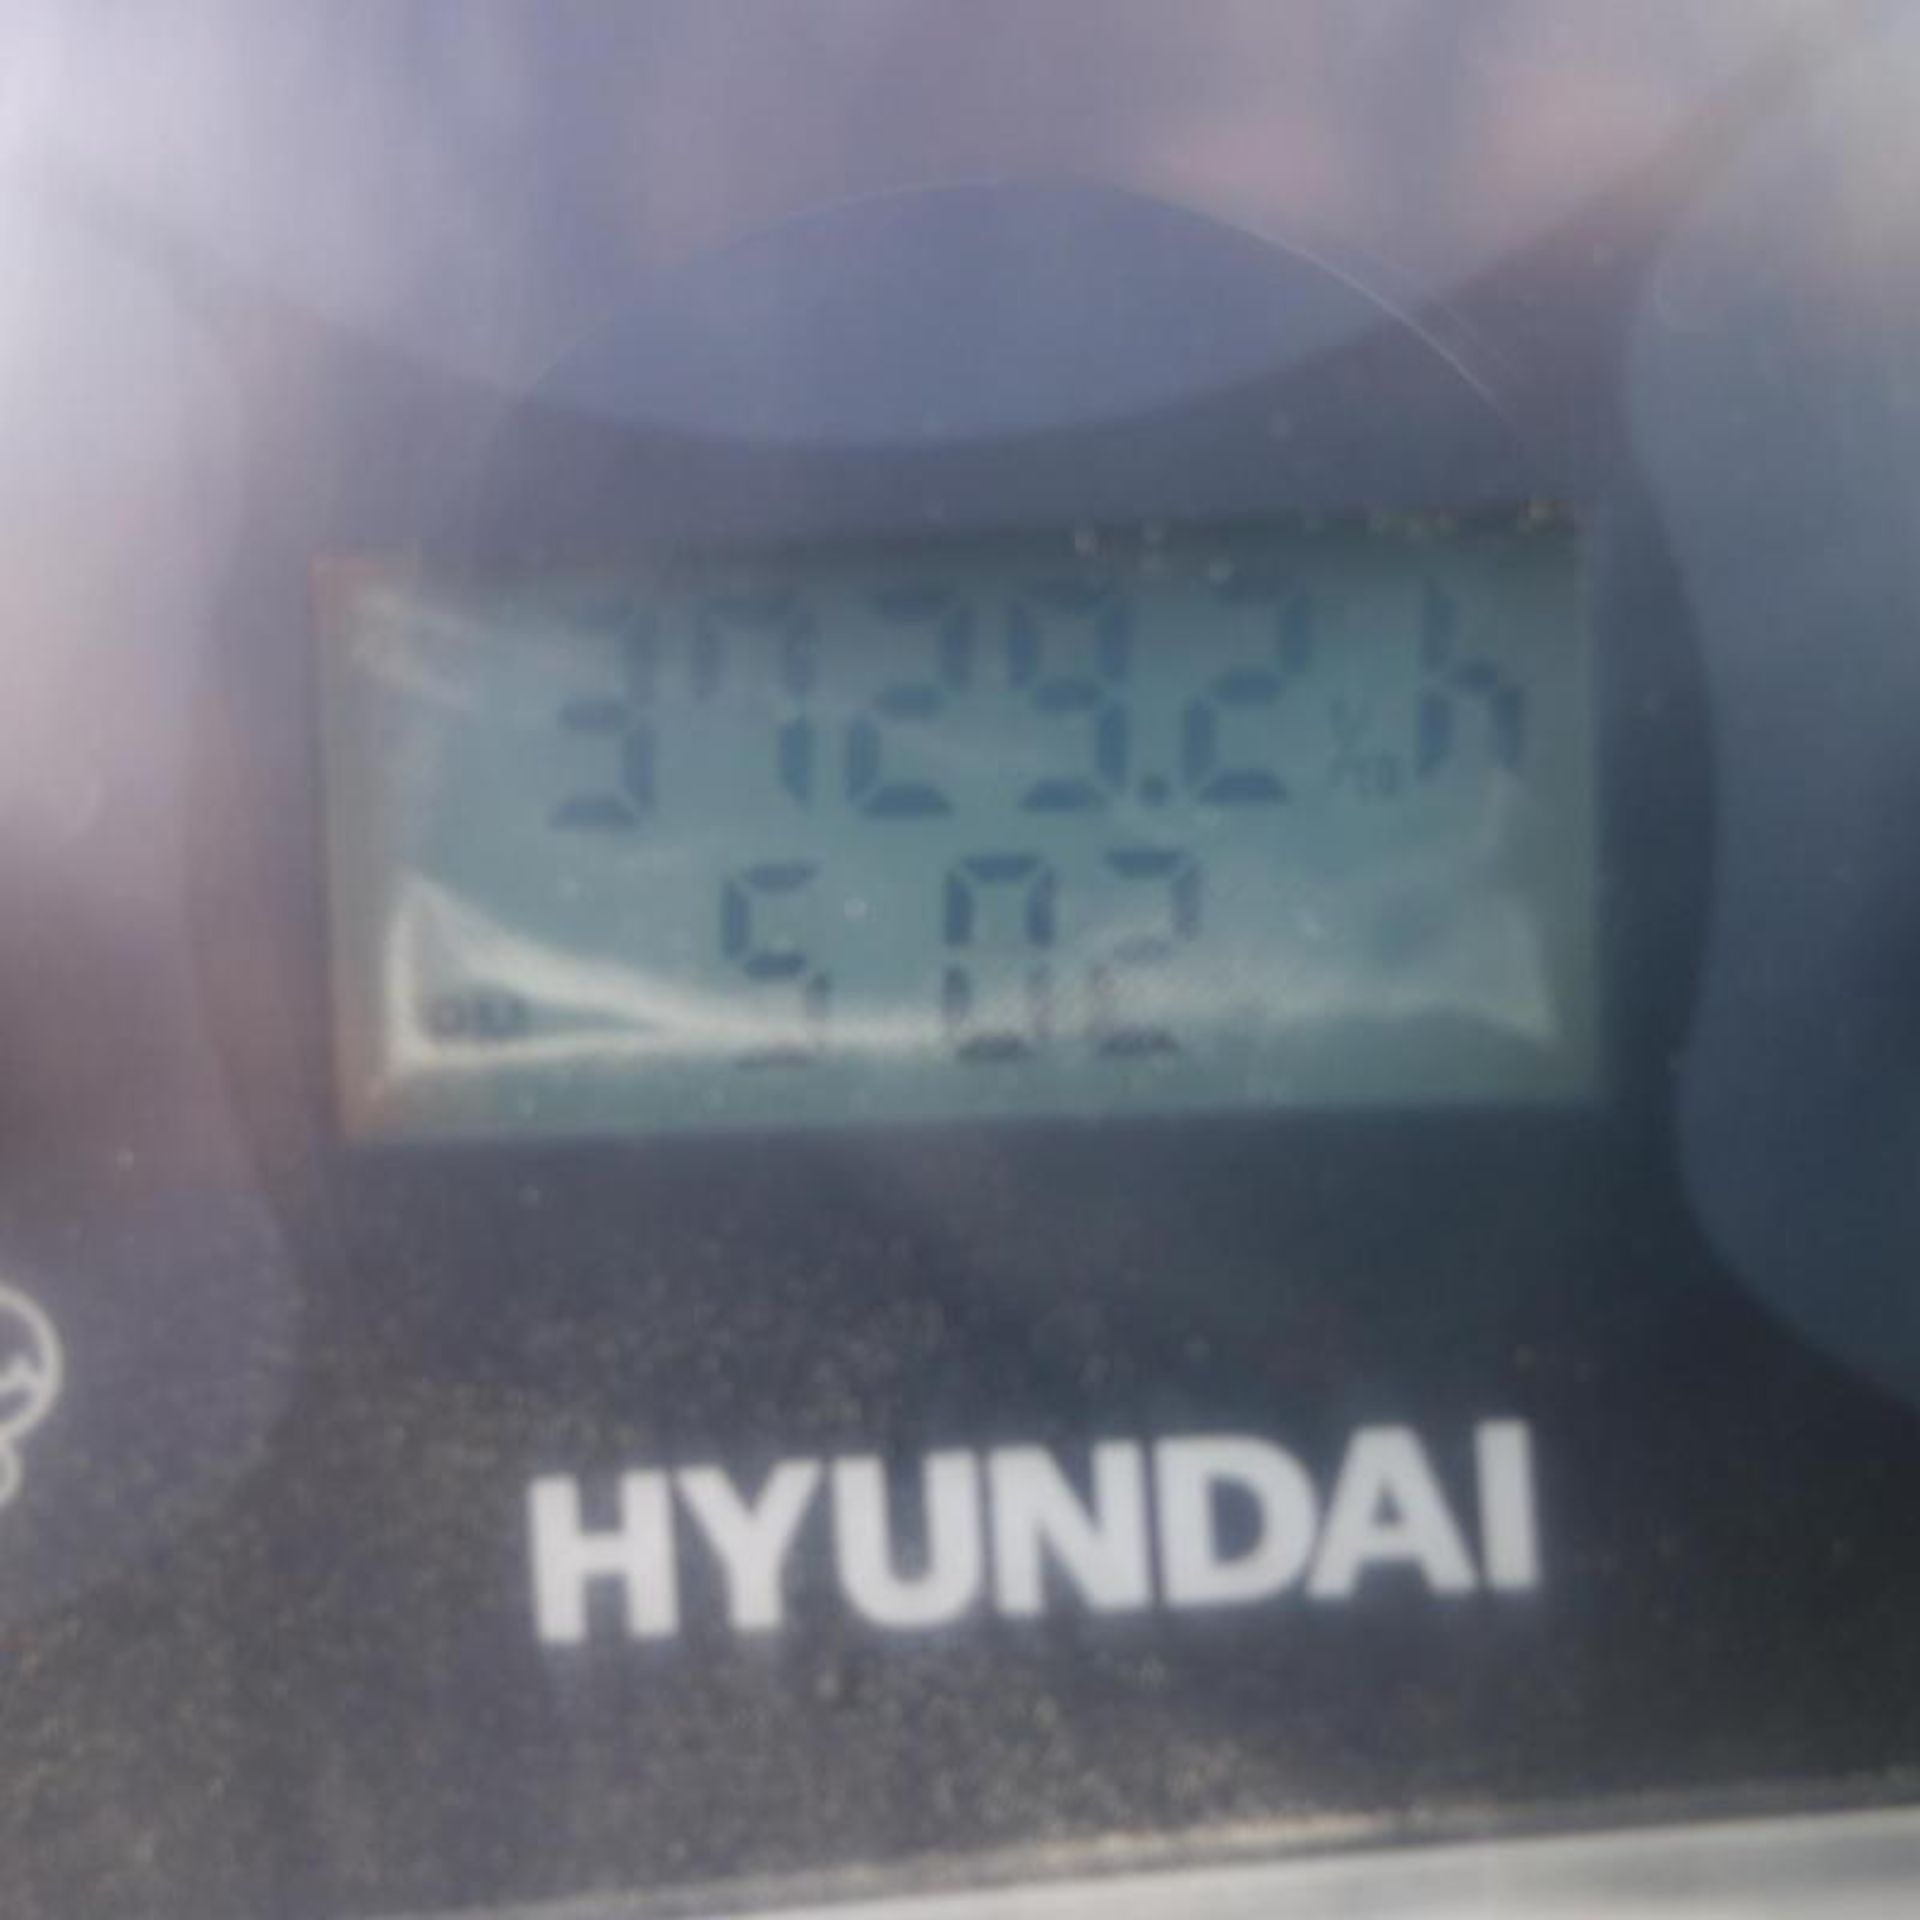 2012 Hyundai 60CR-9 6 Ton Digger, 3729 Hours - Image 13 of 13